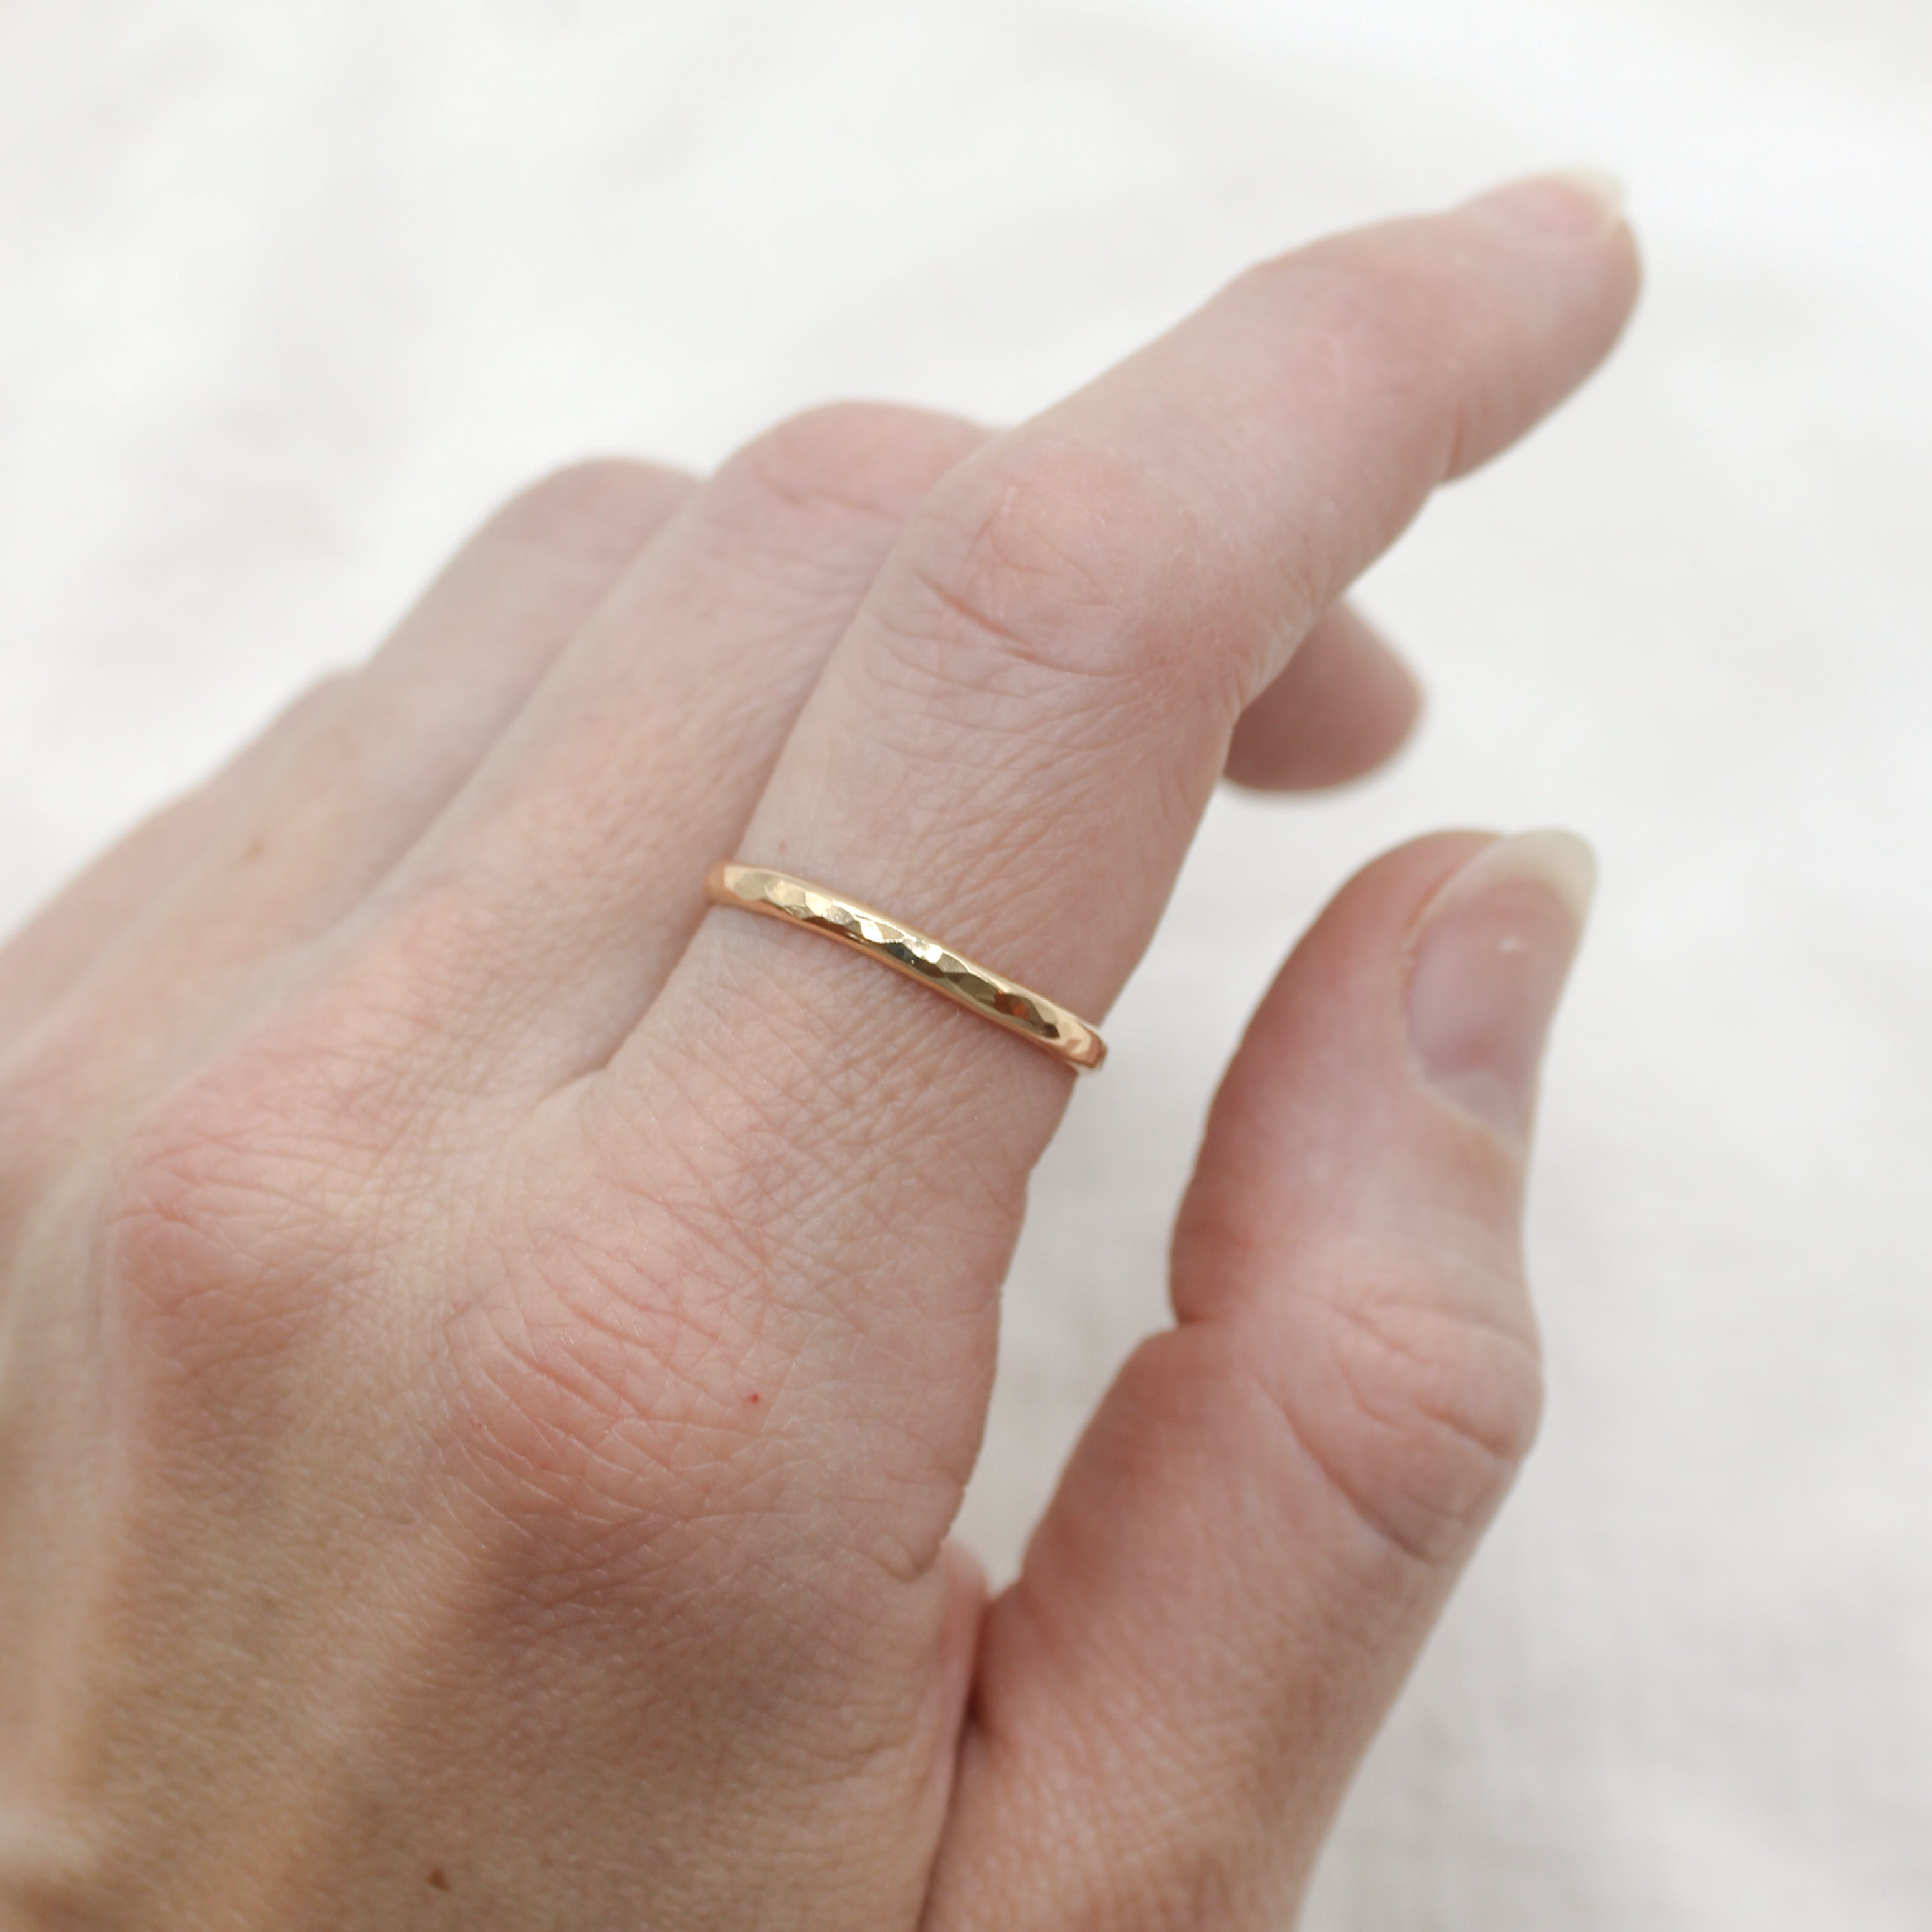 Ring Sizer Tool – Amanda Michelle Jewelry